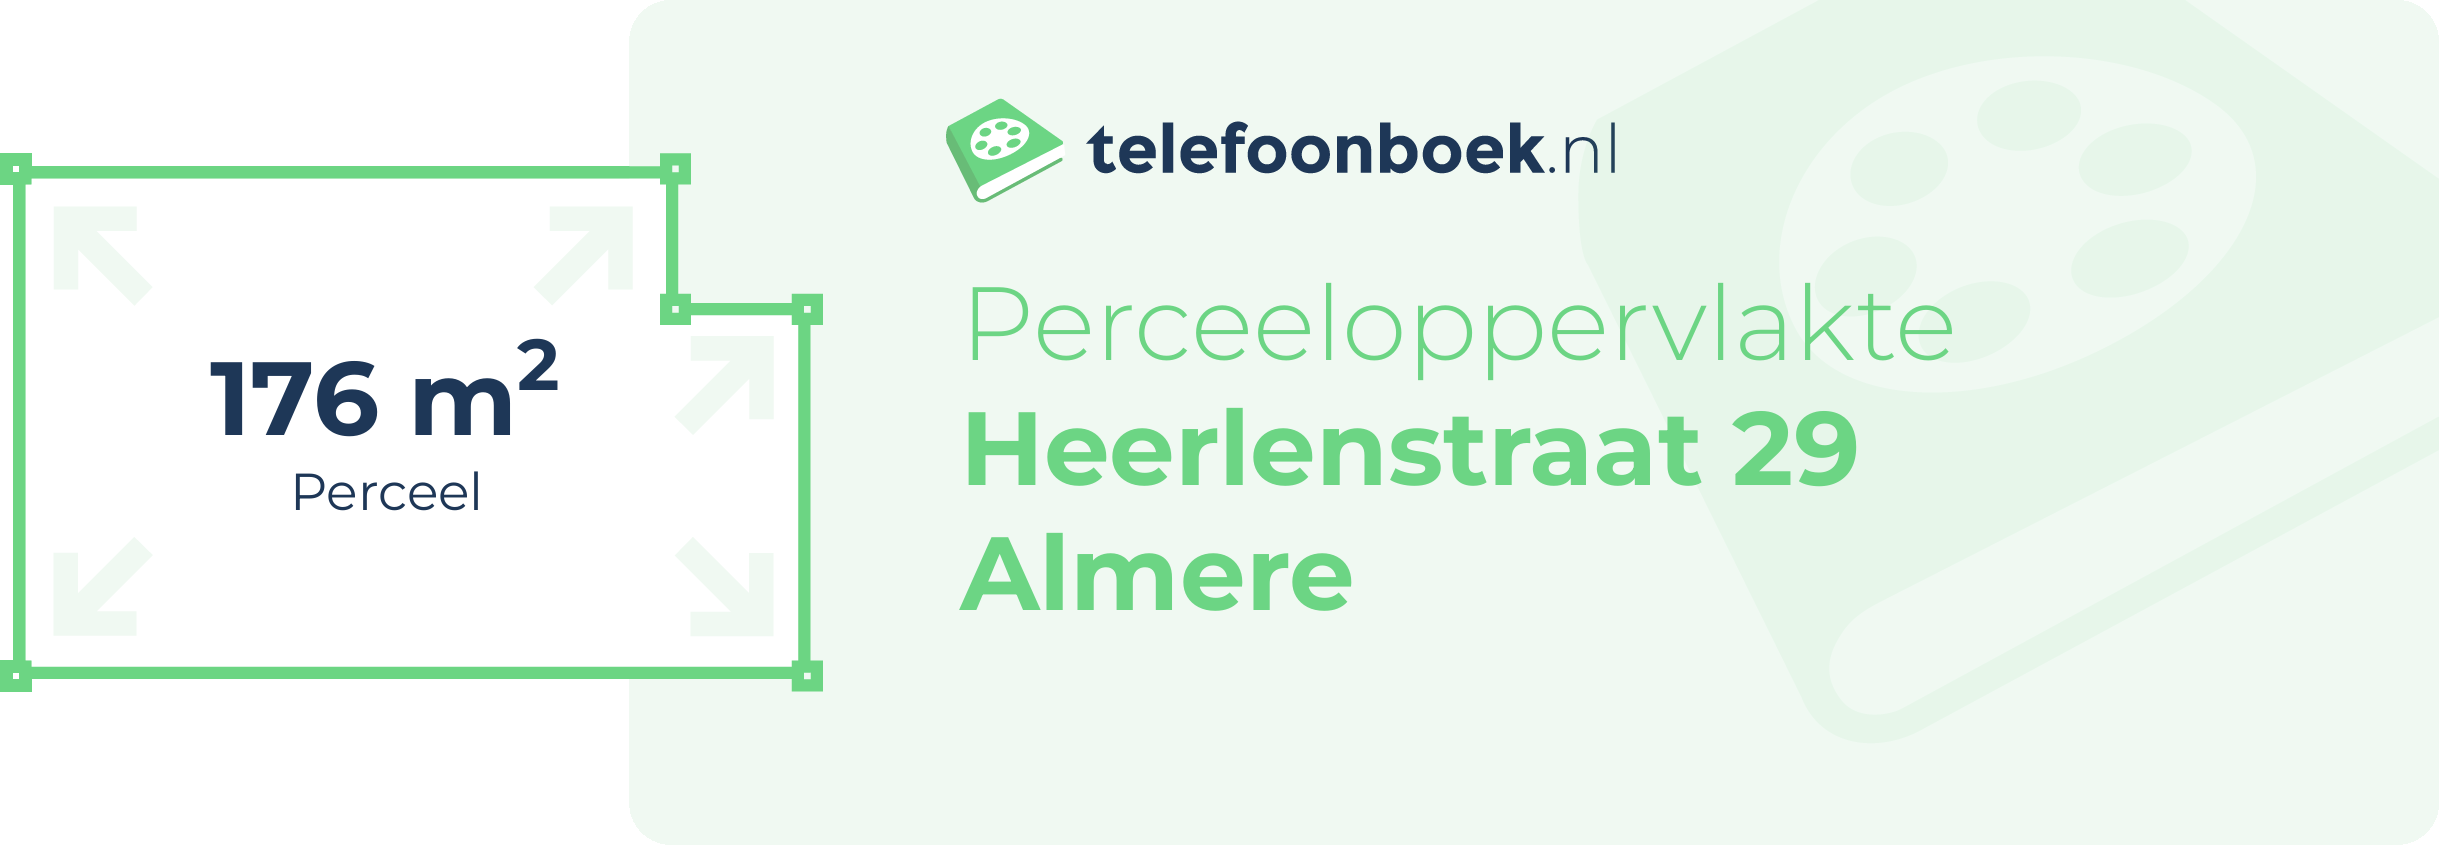 Perceeloppervlakte Heerlenstraat 29 Almere